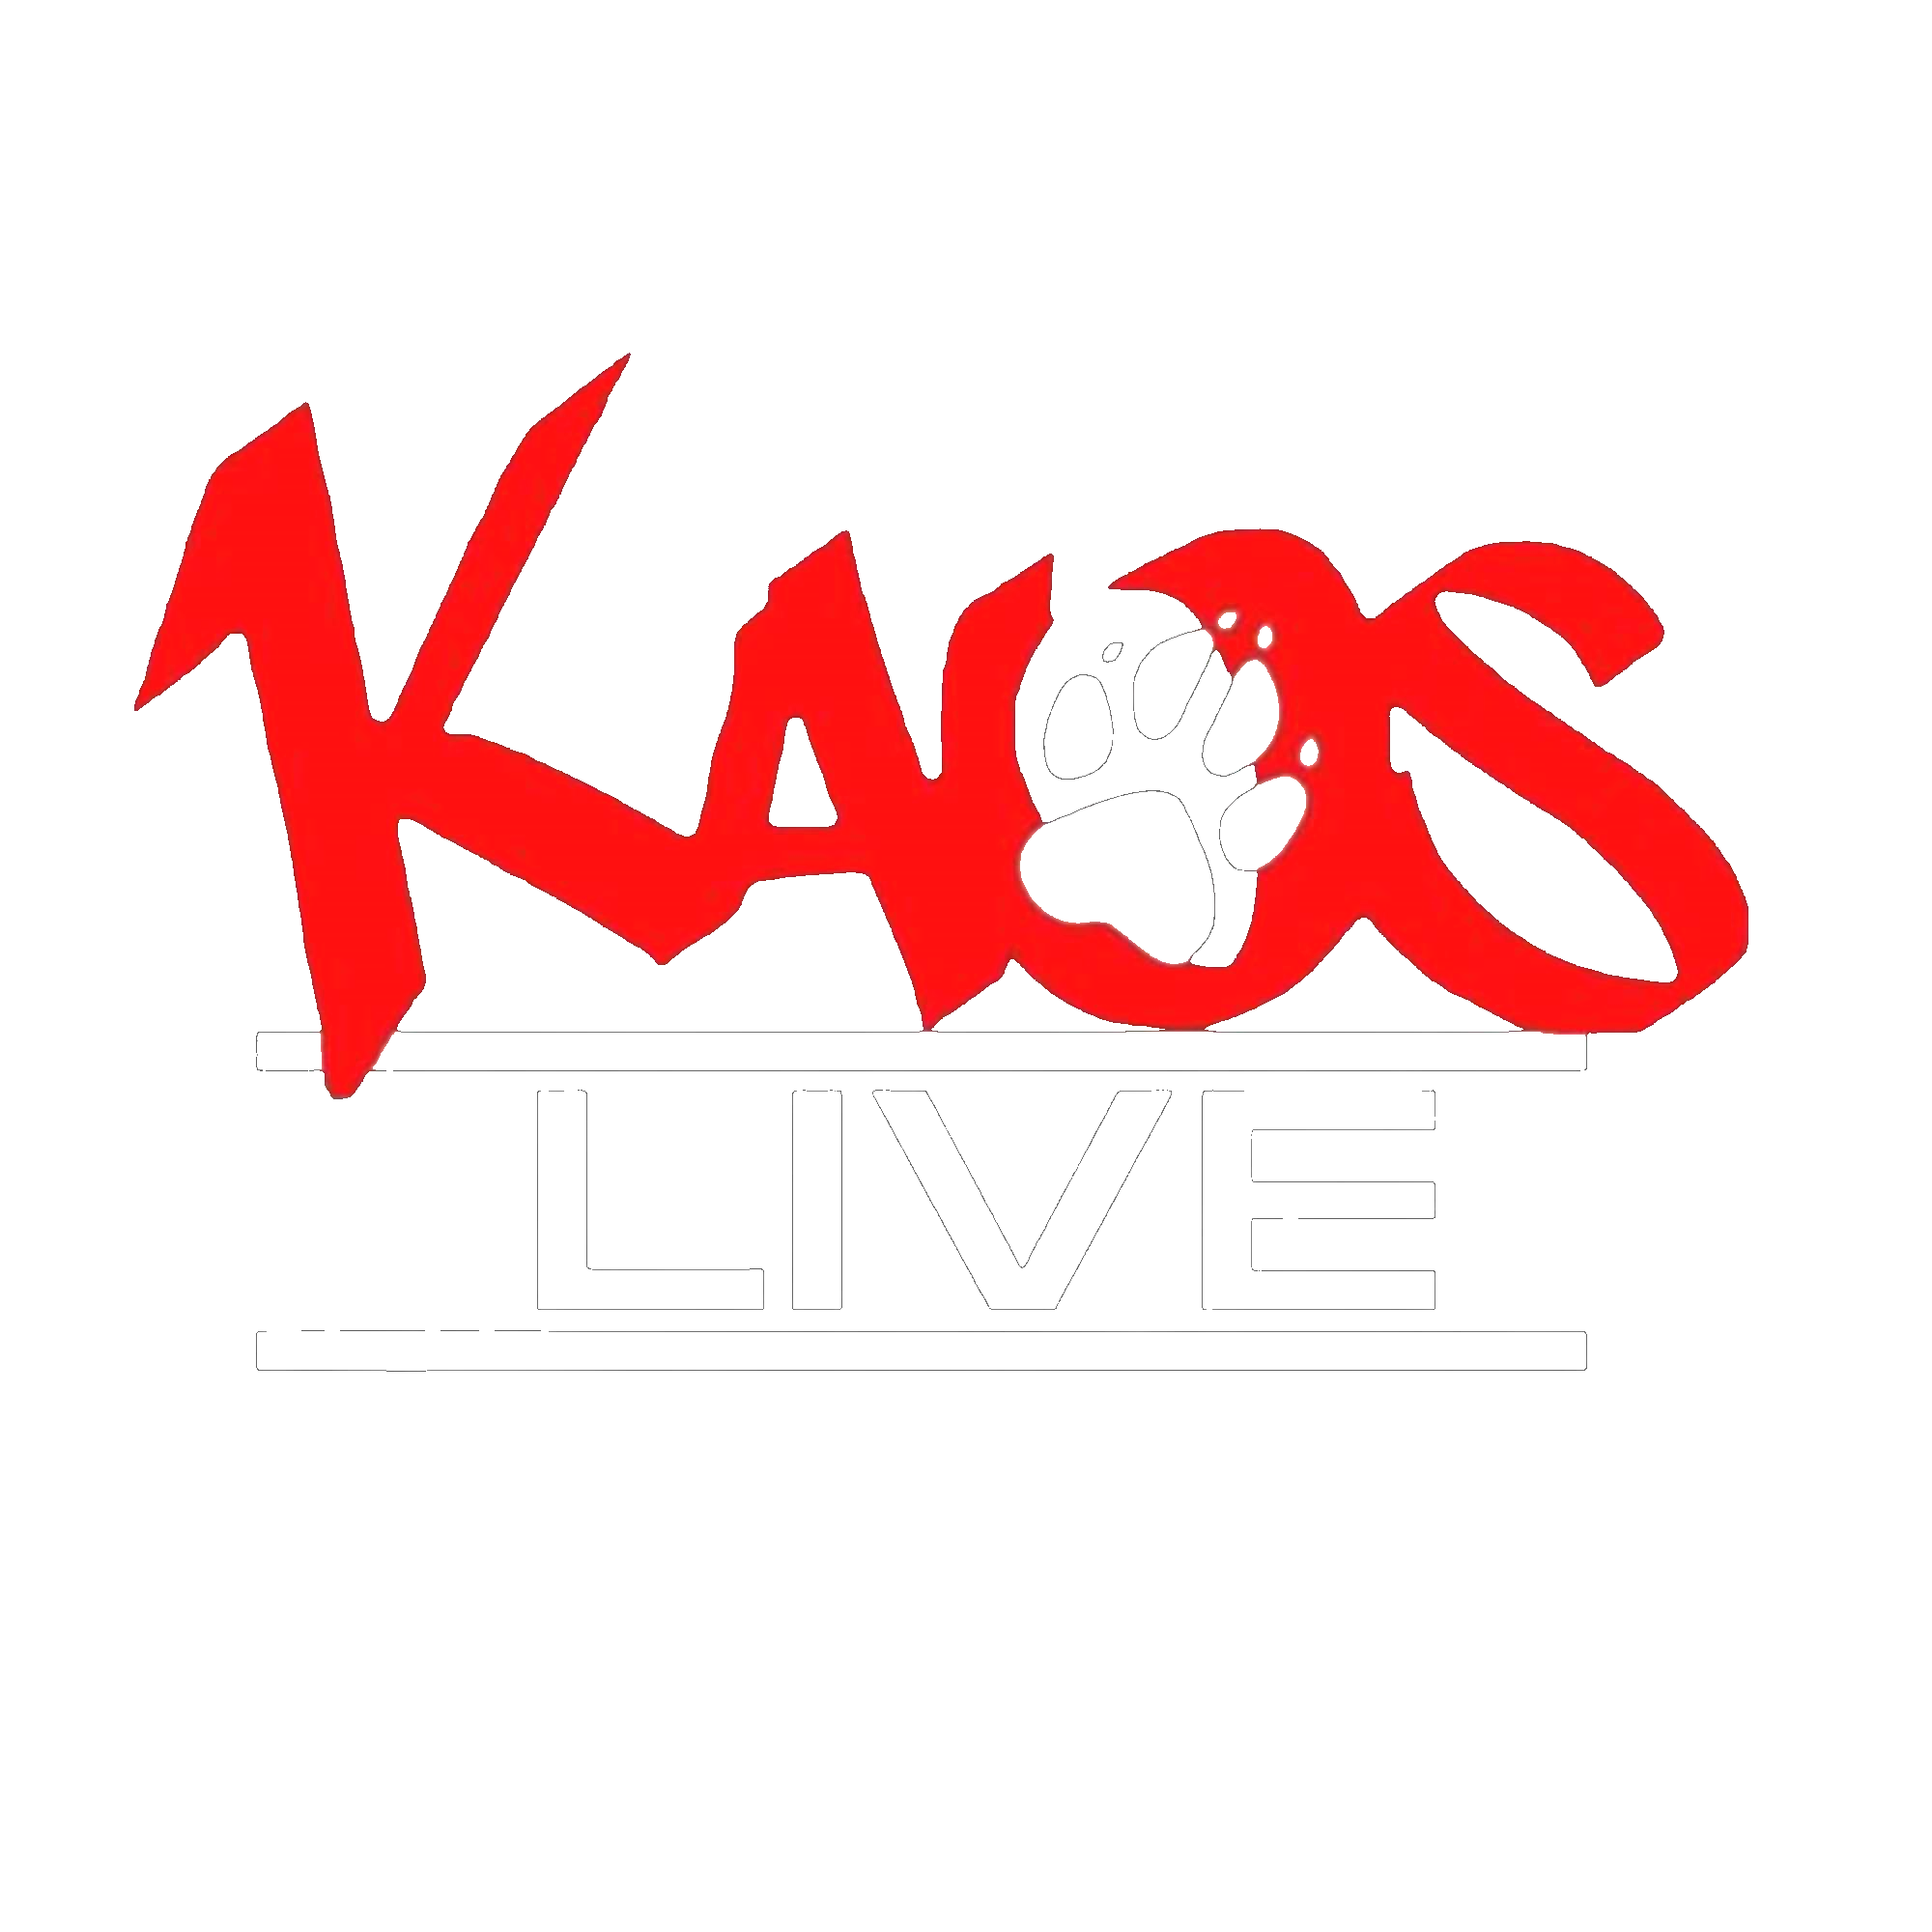 Kaos Live Logo